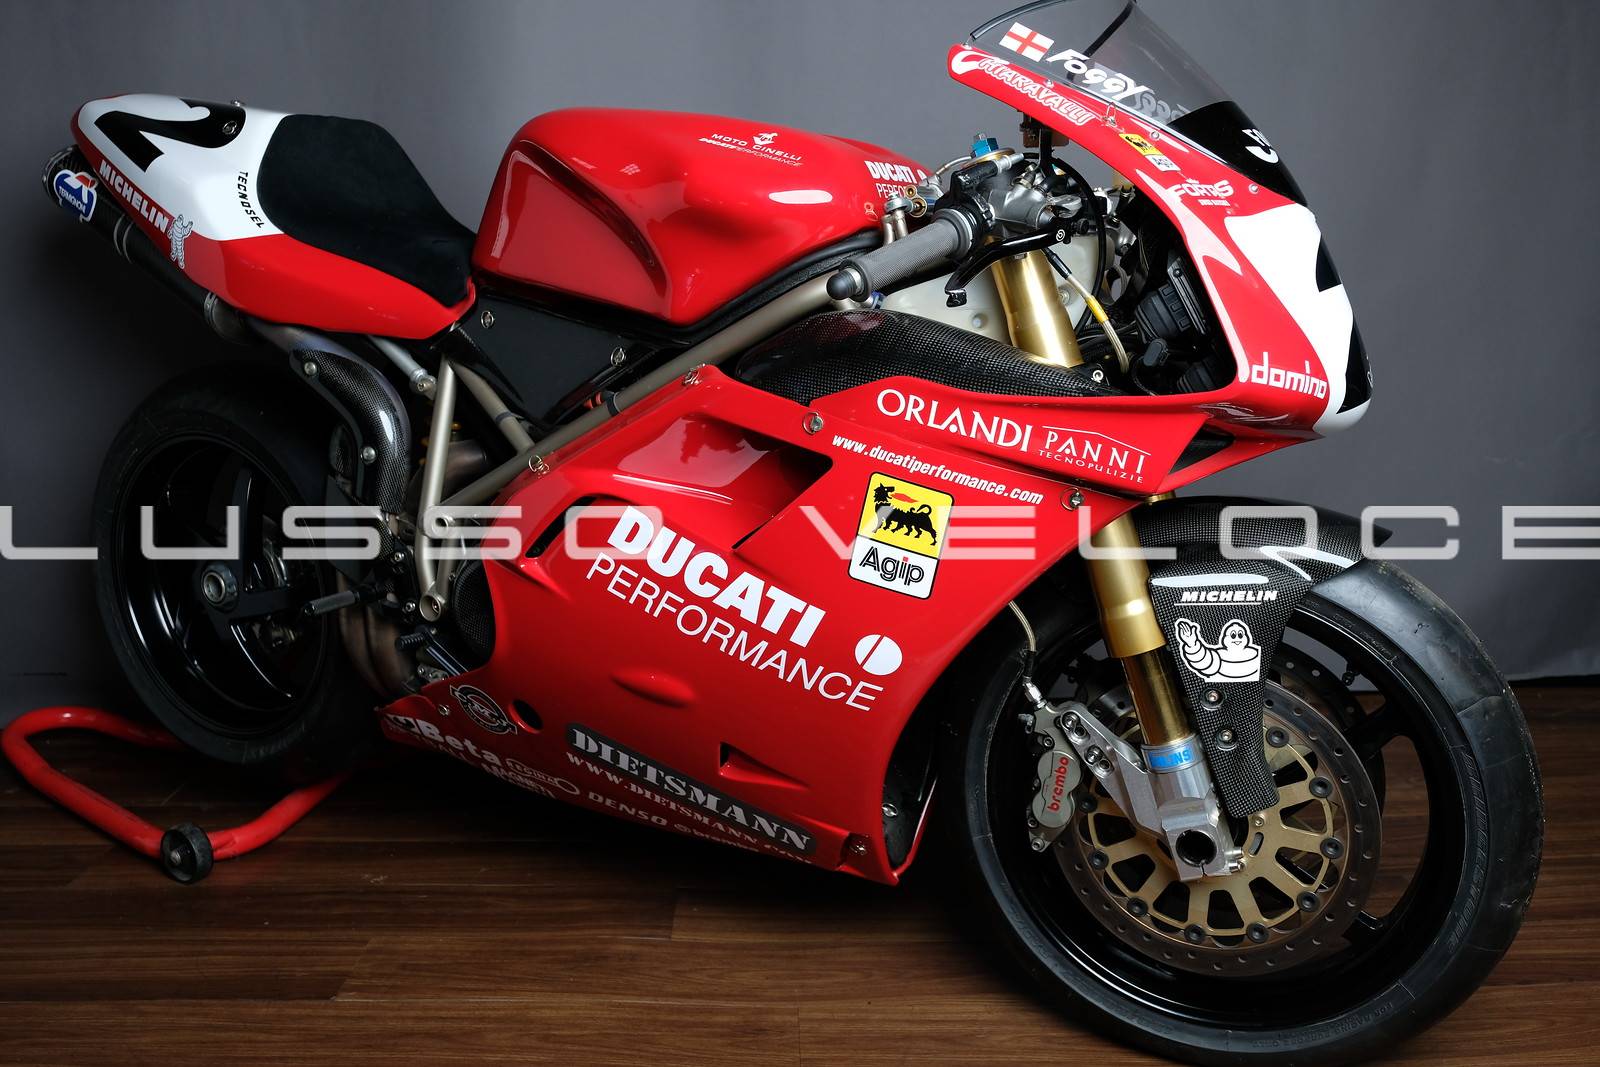 Ducati 996 RS